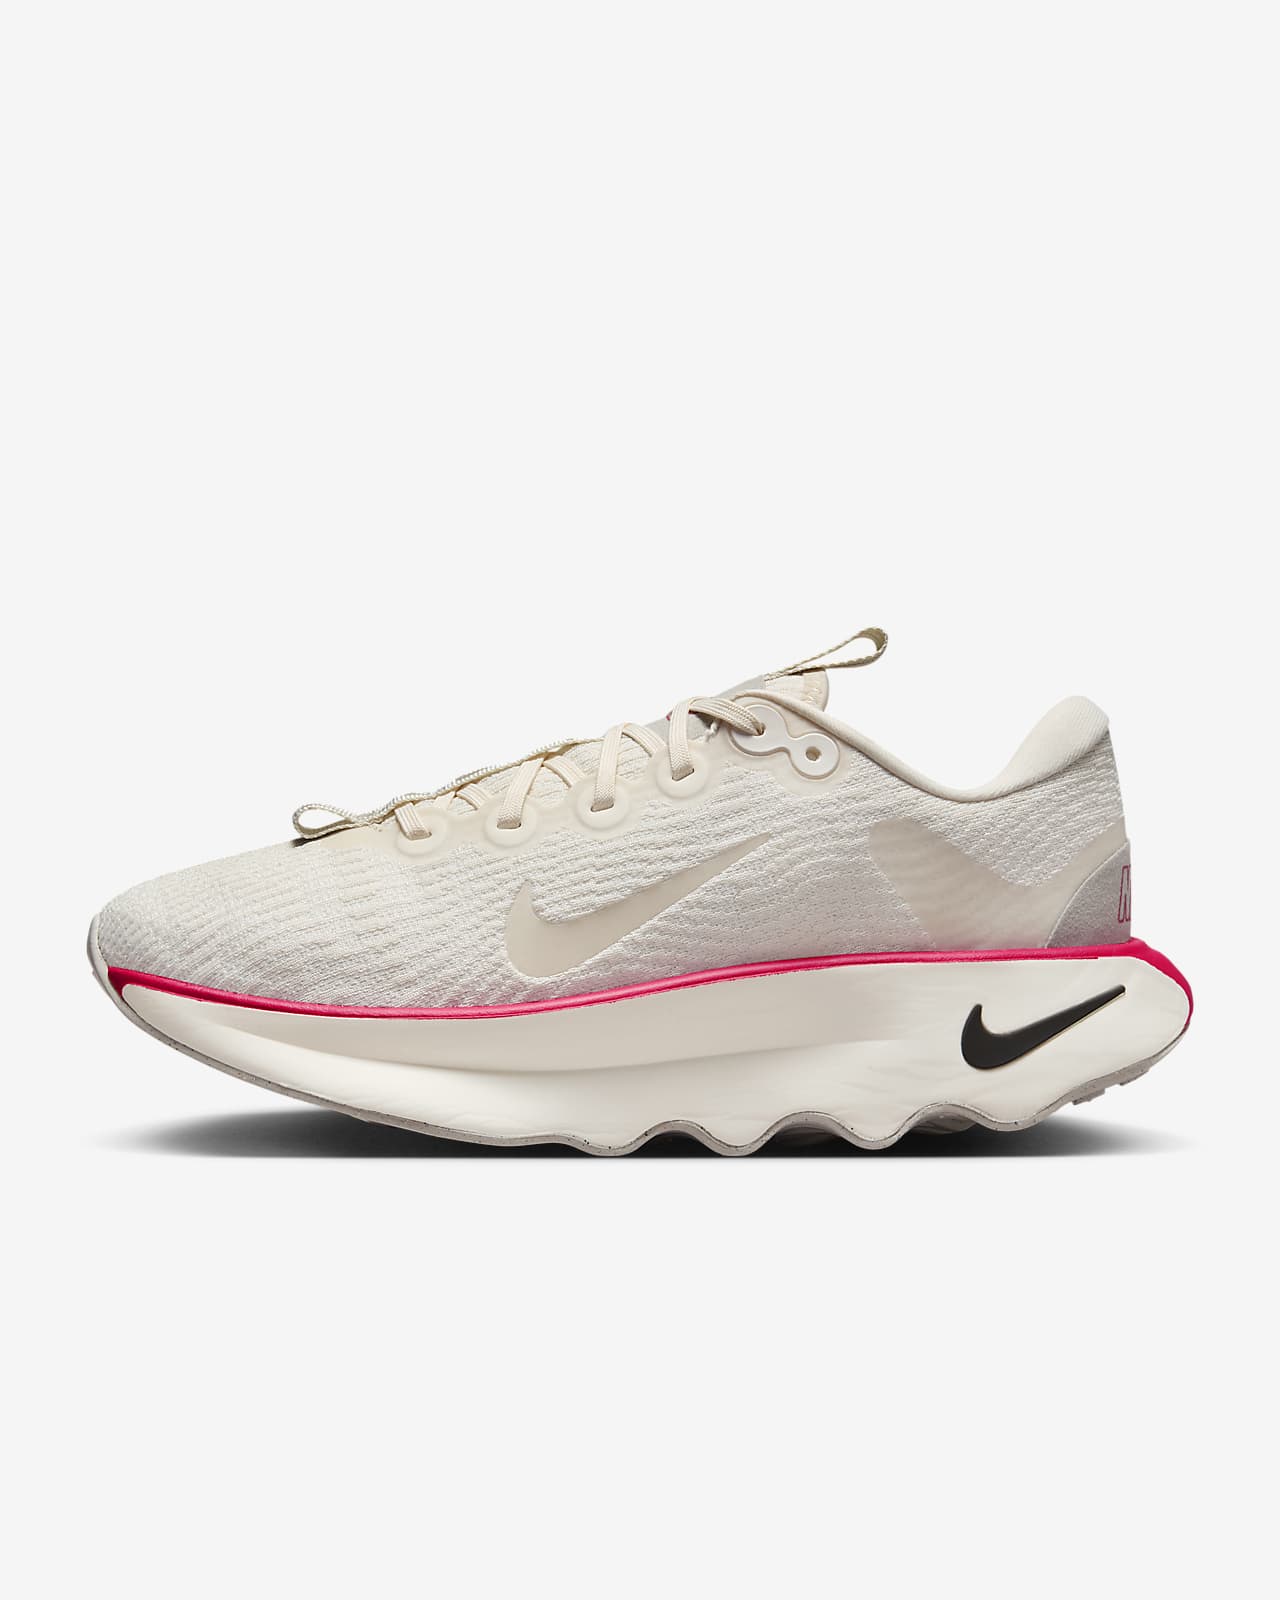 Nike Motiva Women's Walking Shoes